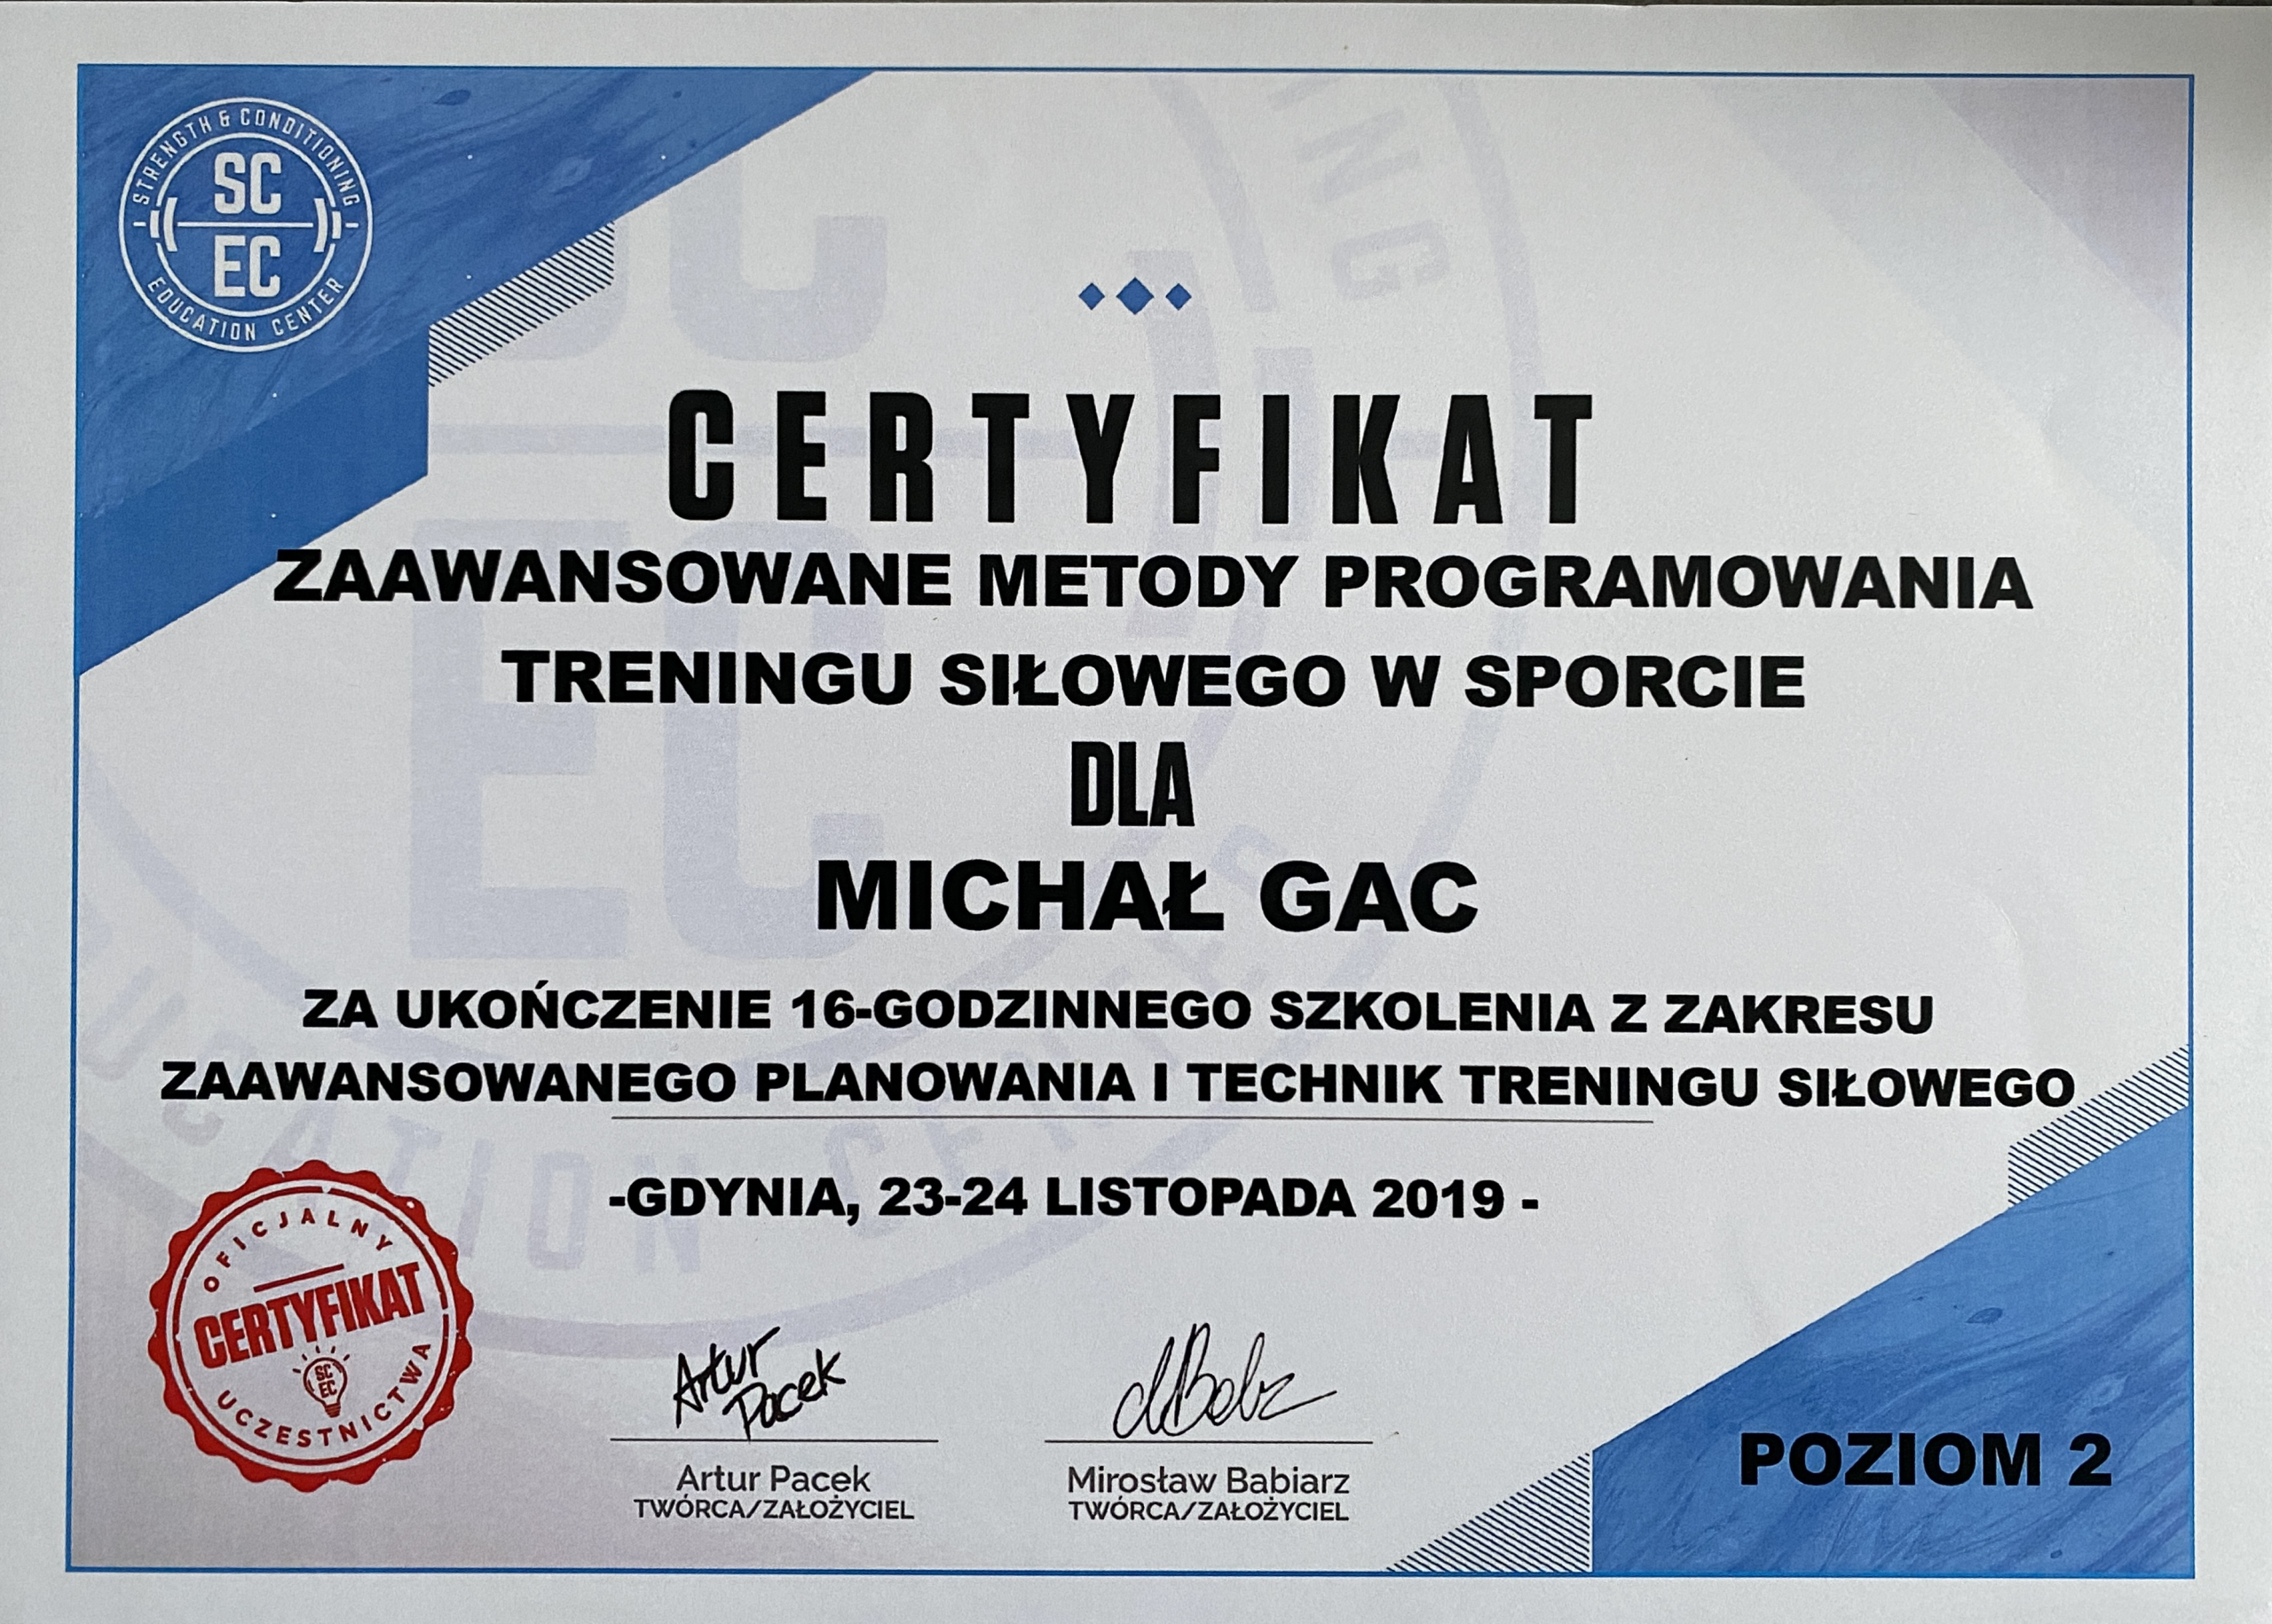 MichaÅ‚ Gac certyfikat